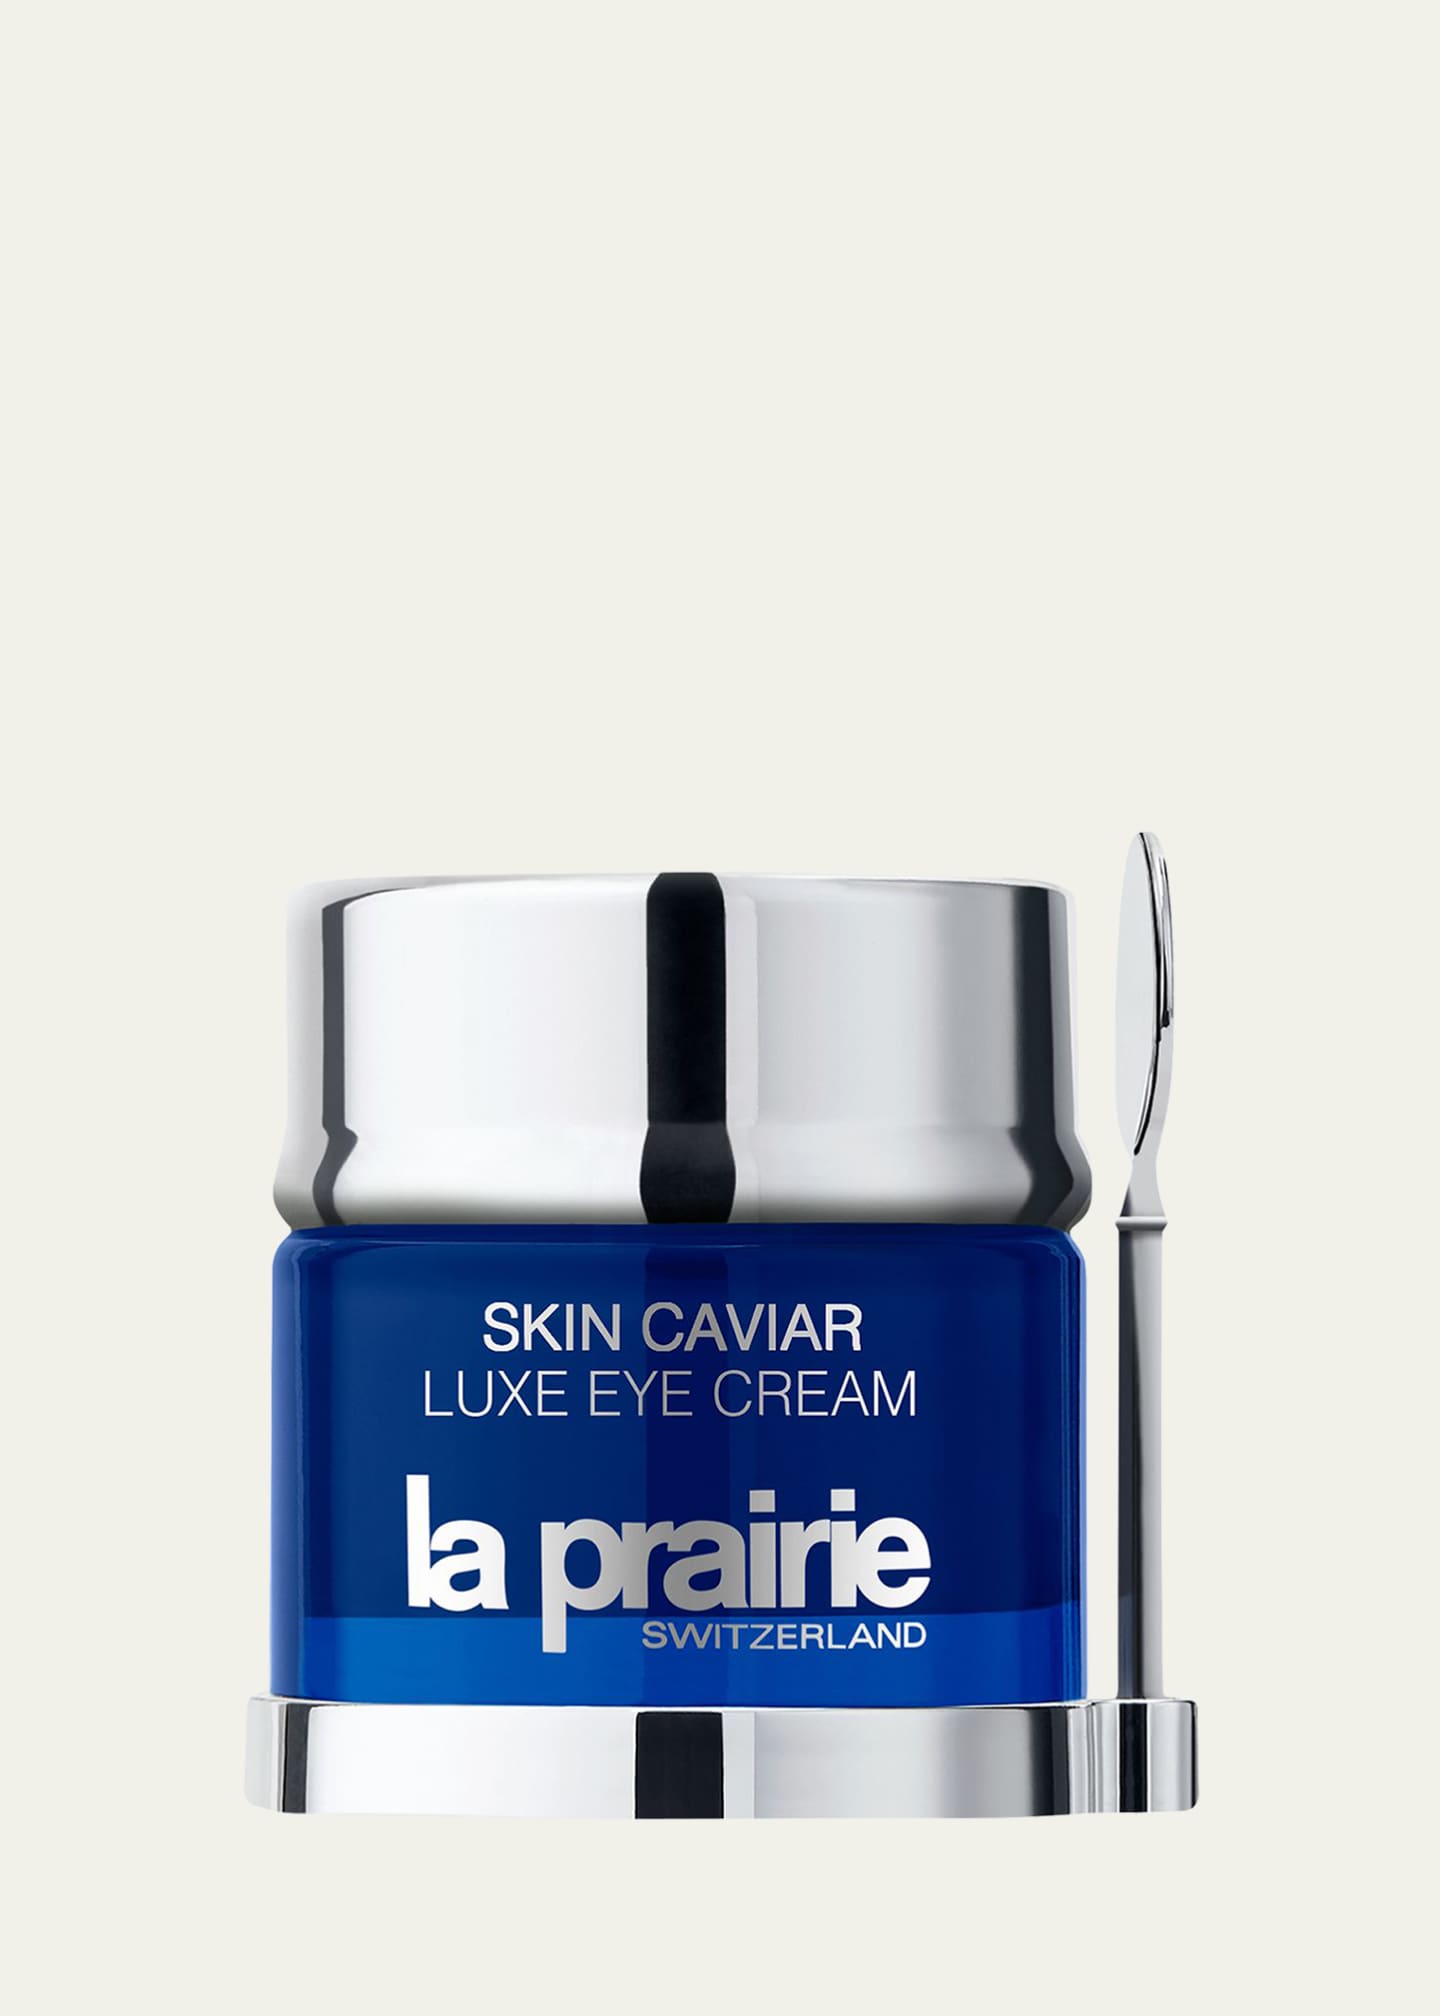 La Prairie Skin Caviar Luxe Eye Cream Lifting and Firming Eye Cream Image 1 of 5